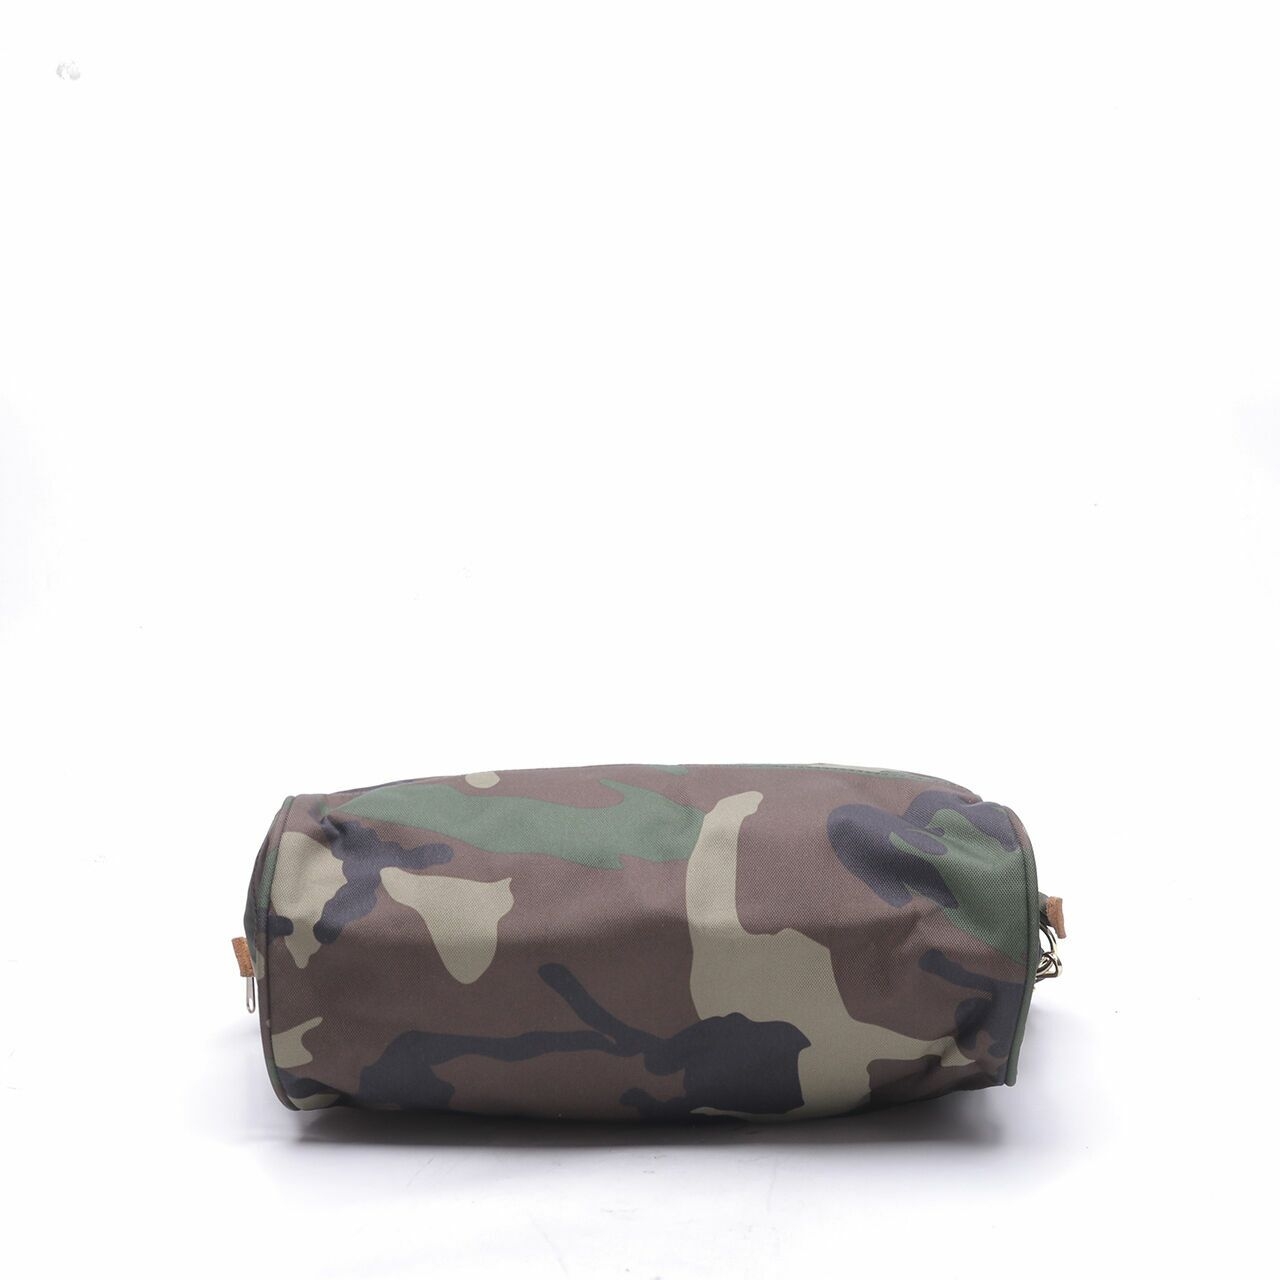 Anello Army Satchel Bag